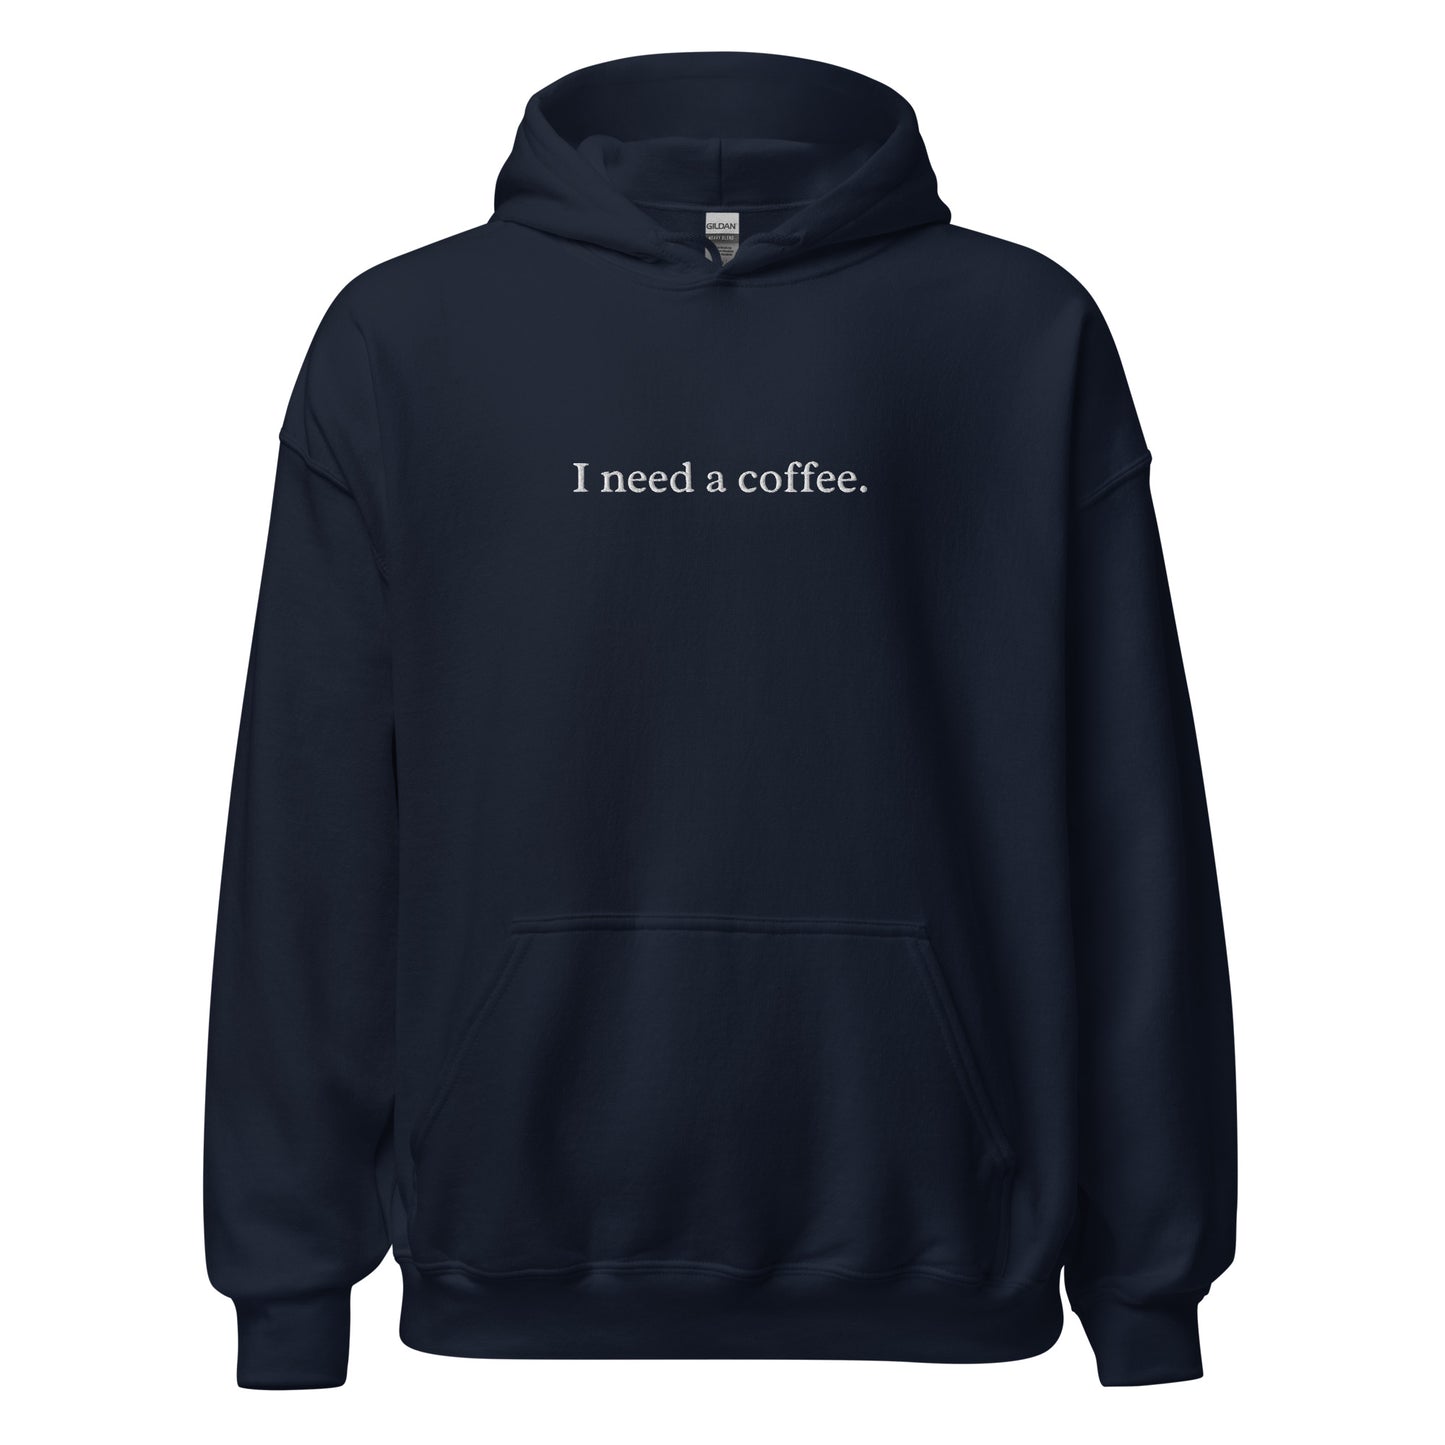 "I need a coffee" Embroided Hoodie